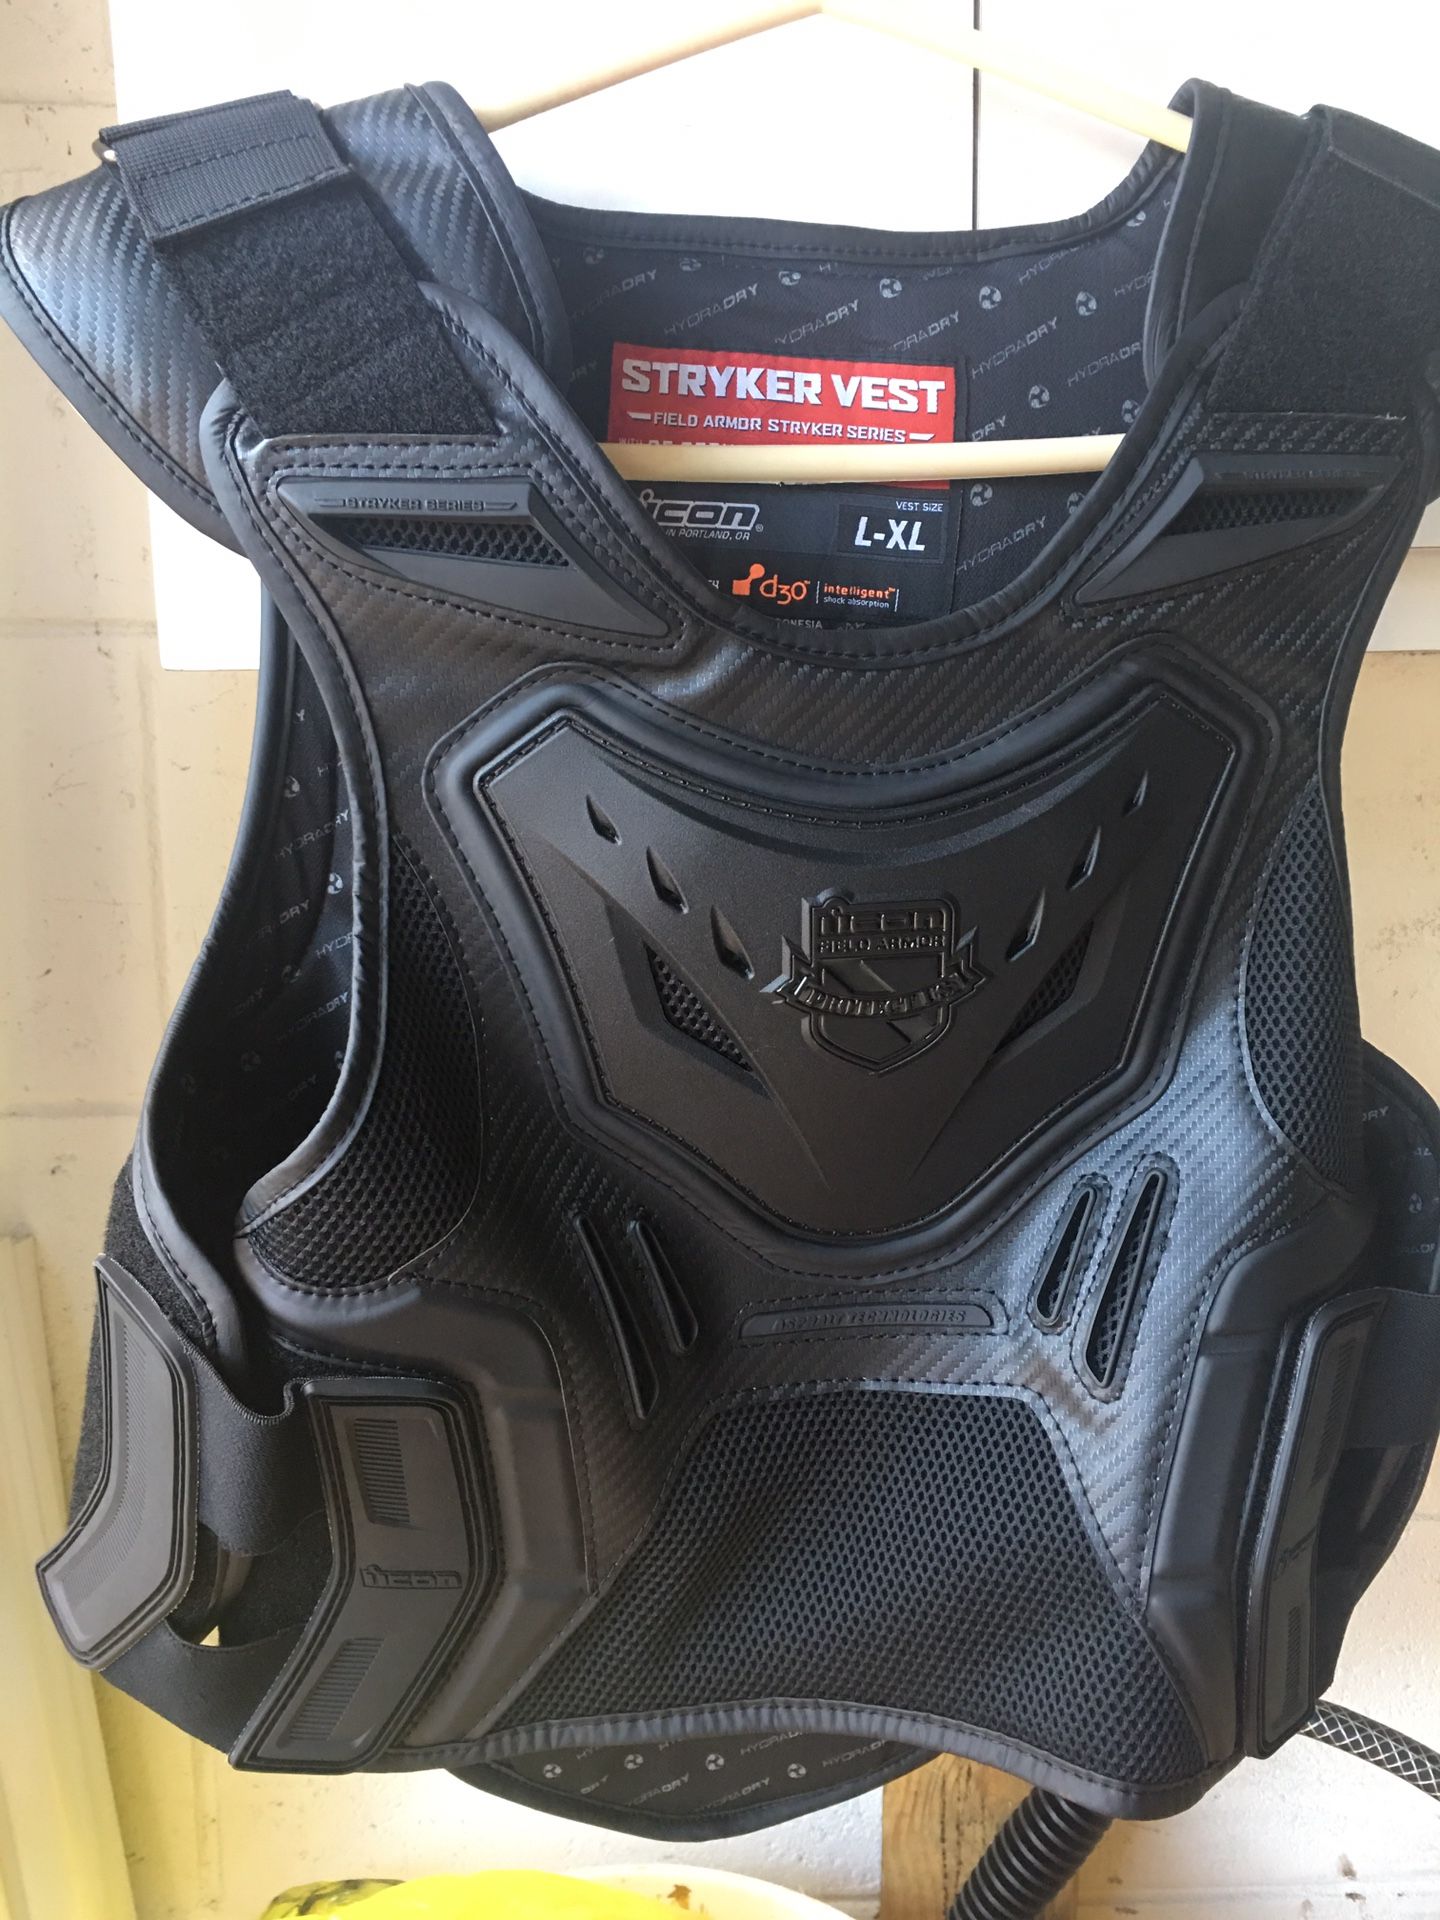 Armor vest brand new L/XL